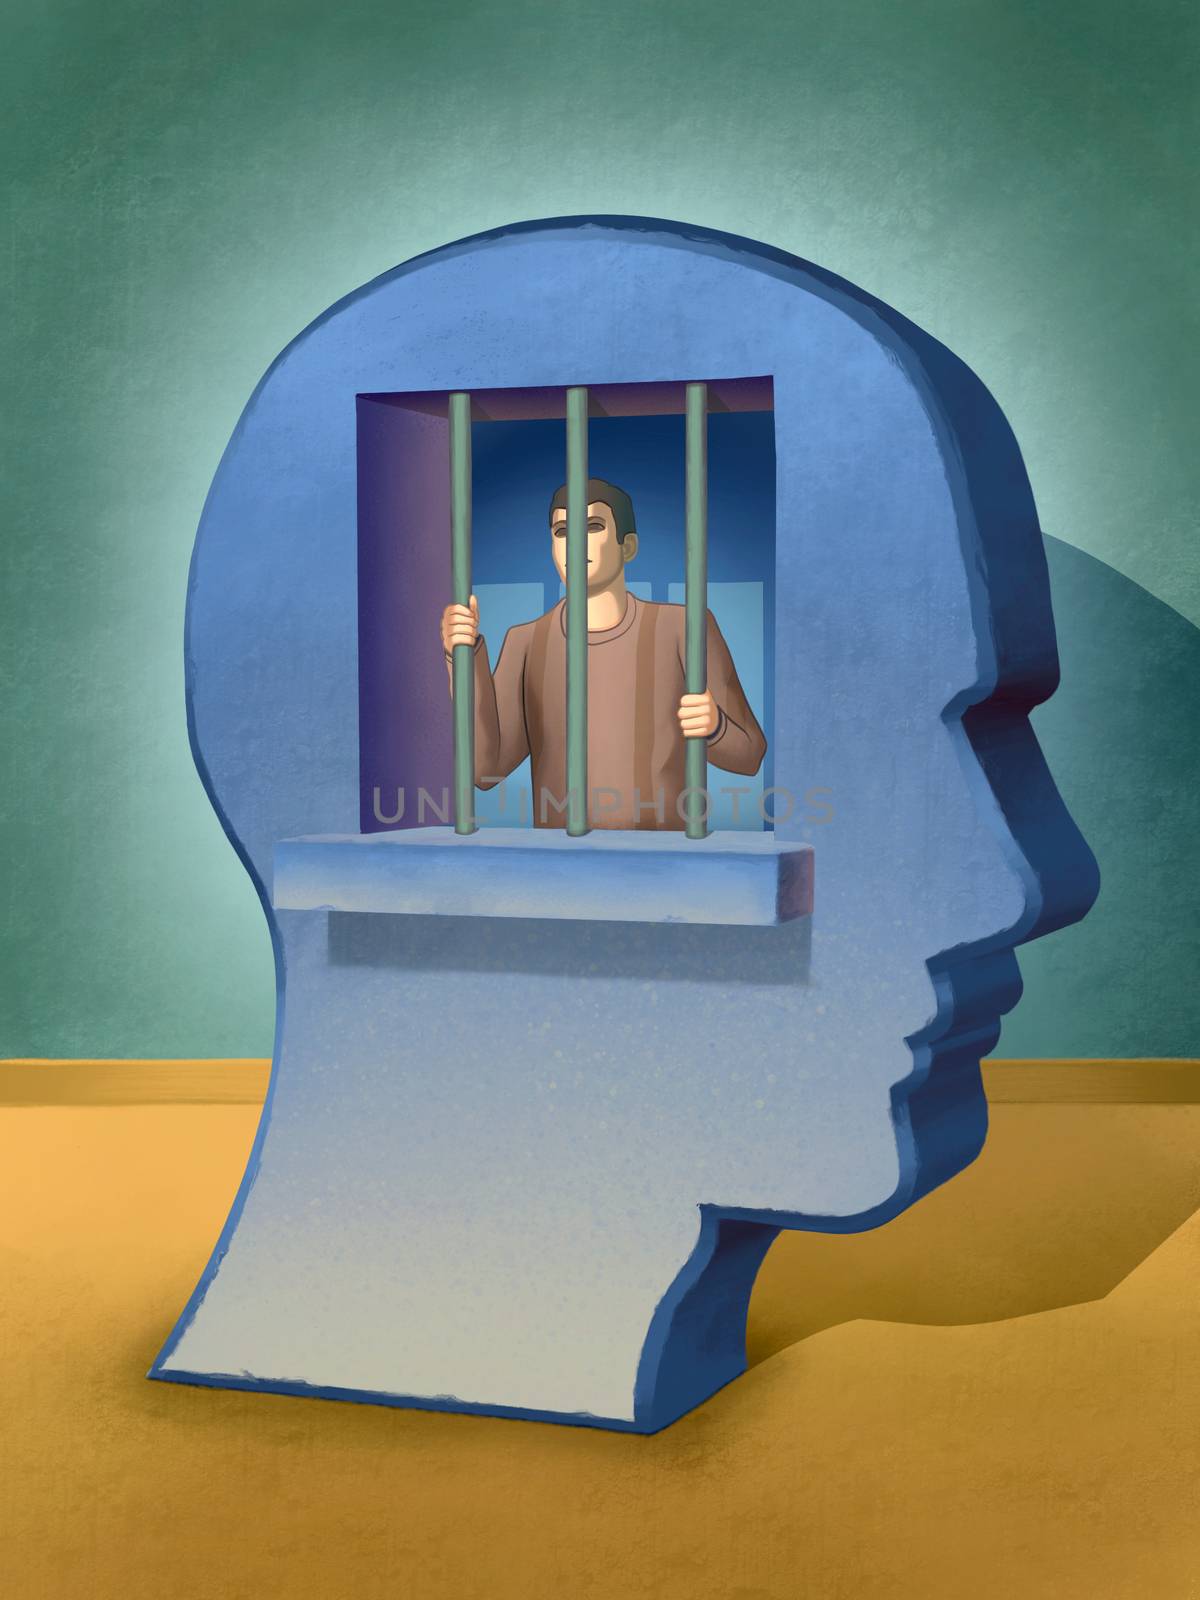 People trapped inside its own mind. Digital illustration.